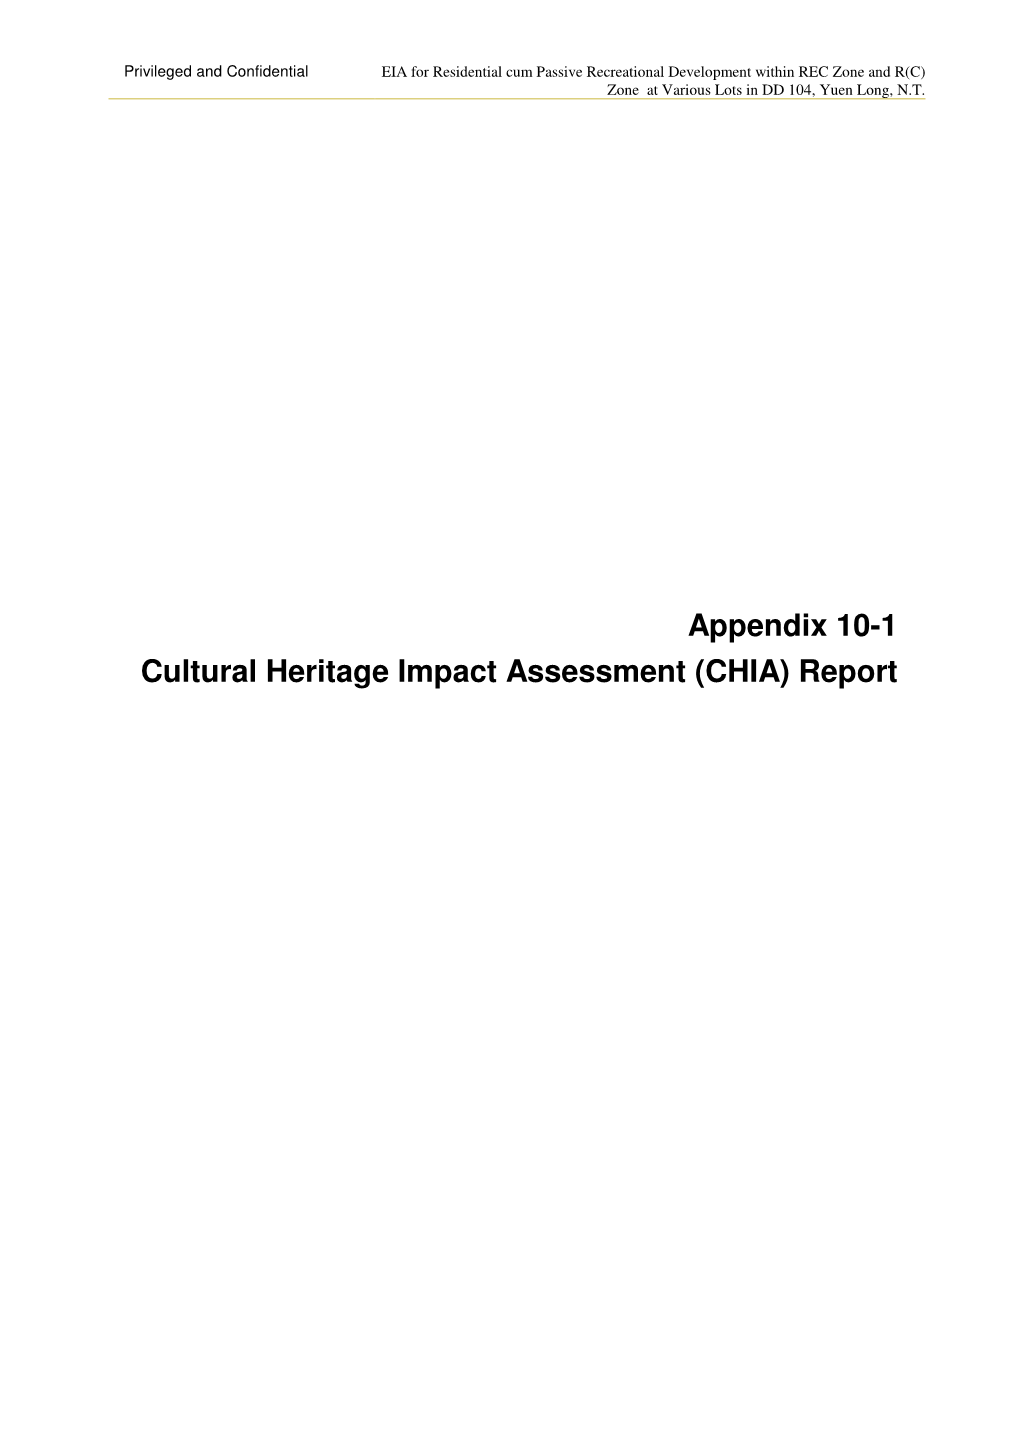 Appendix 10-1 Cultural Heritage Impact Assessment (CHIA) Report